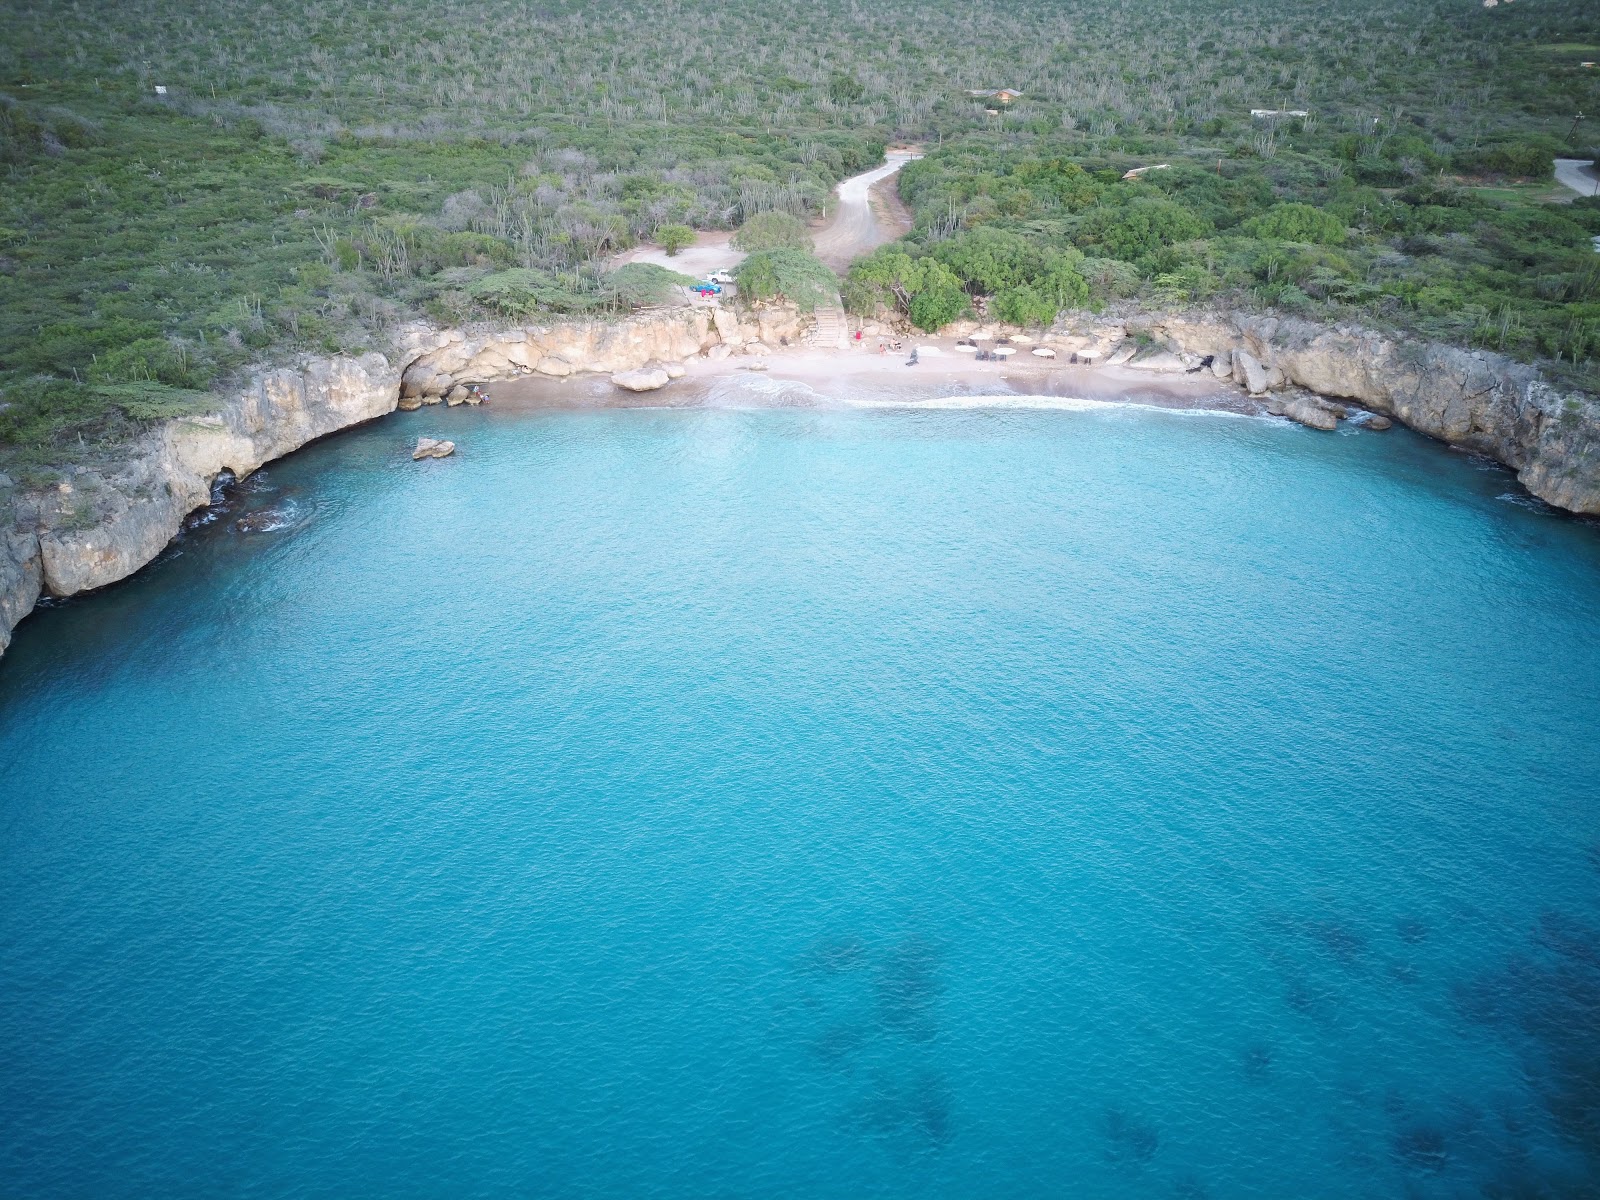 Foto de Playa Jeremi localizado em área natural